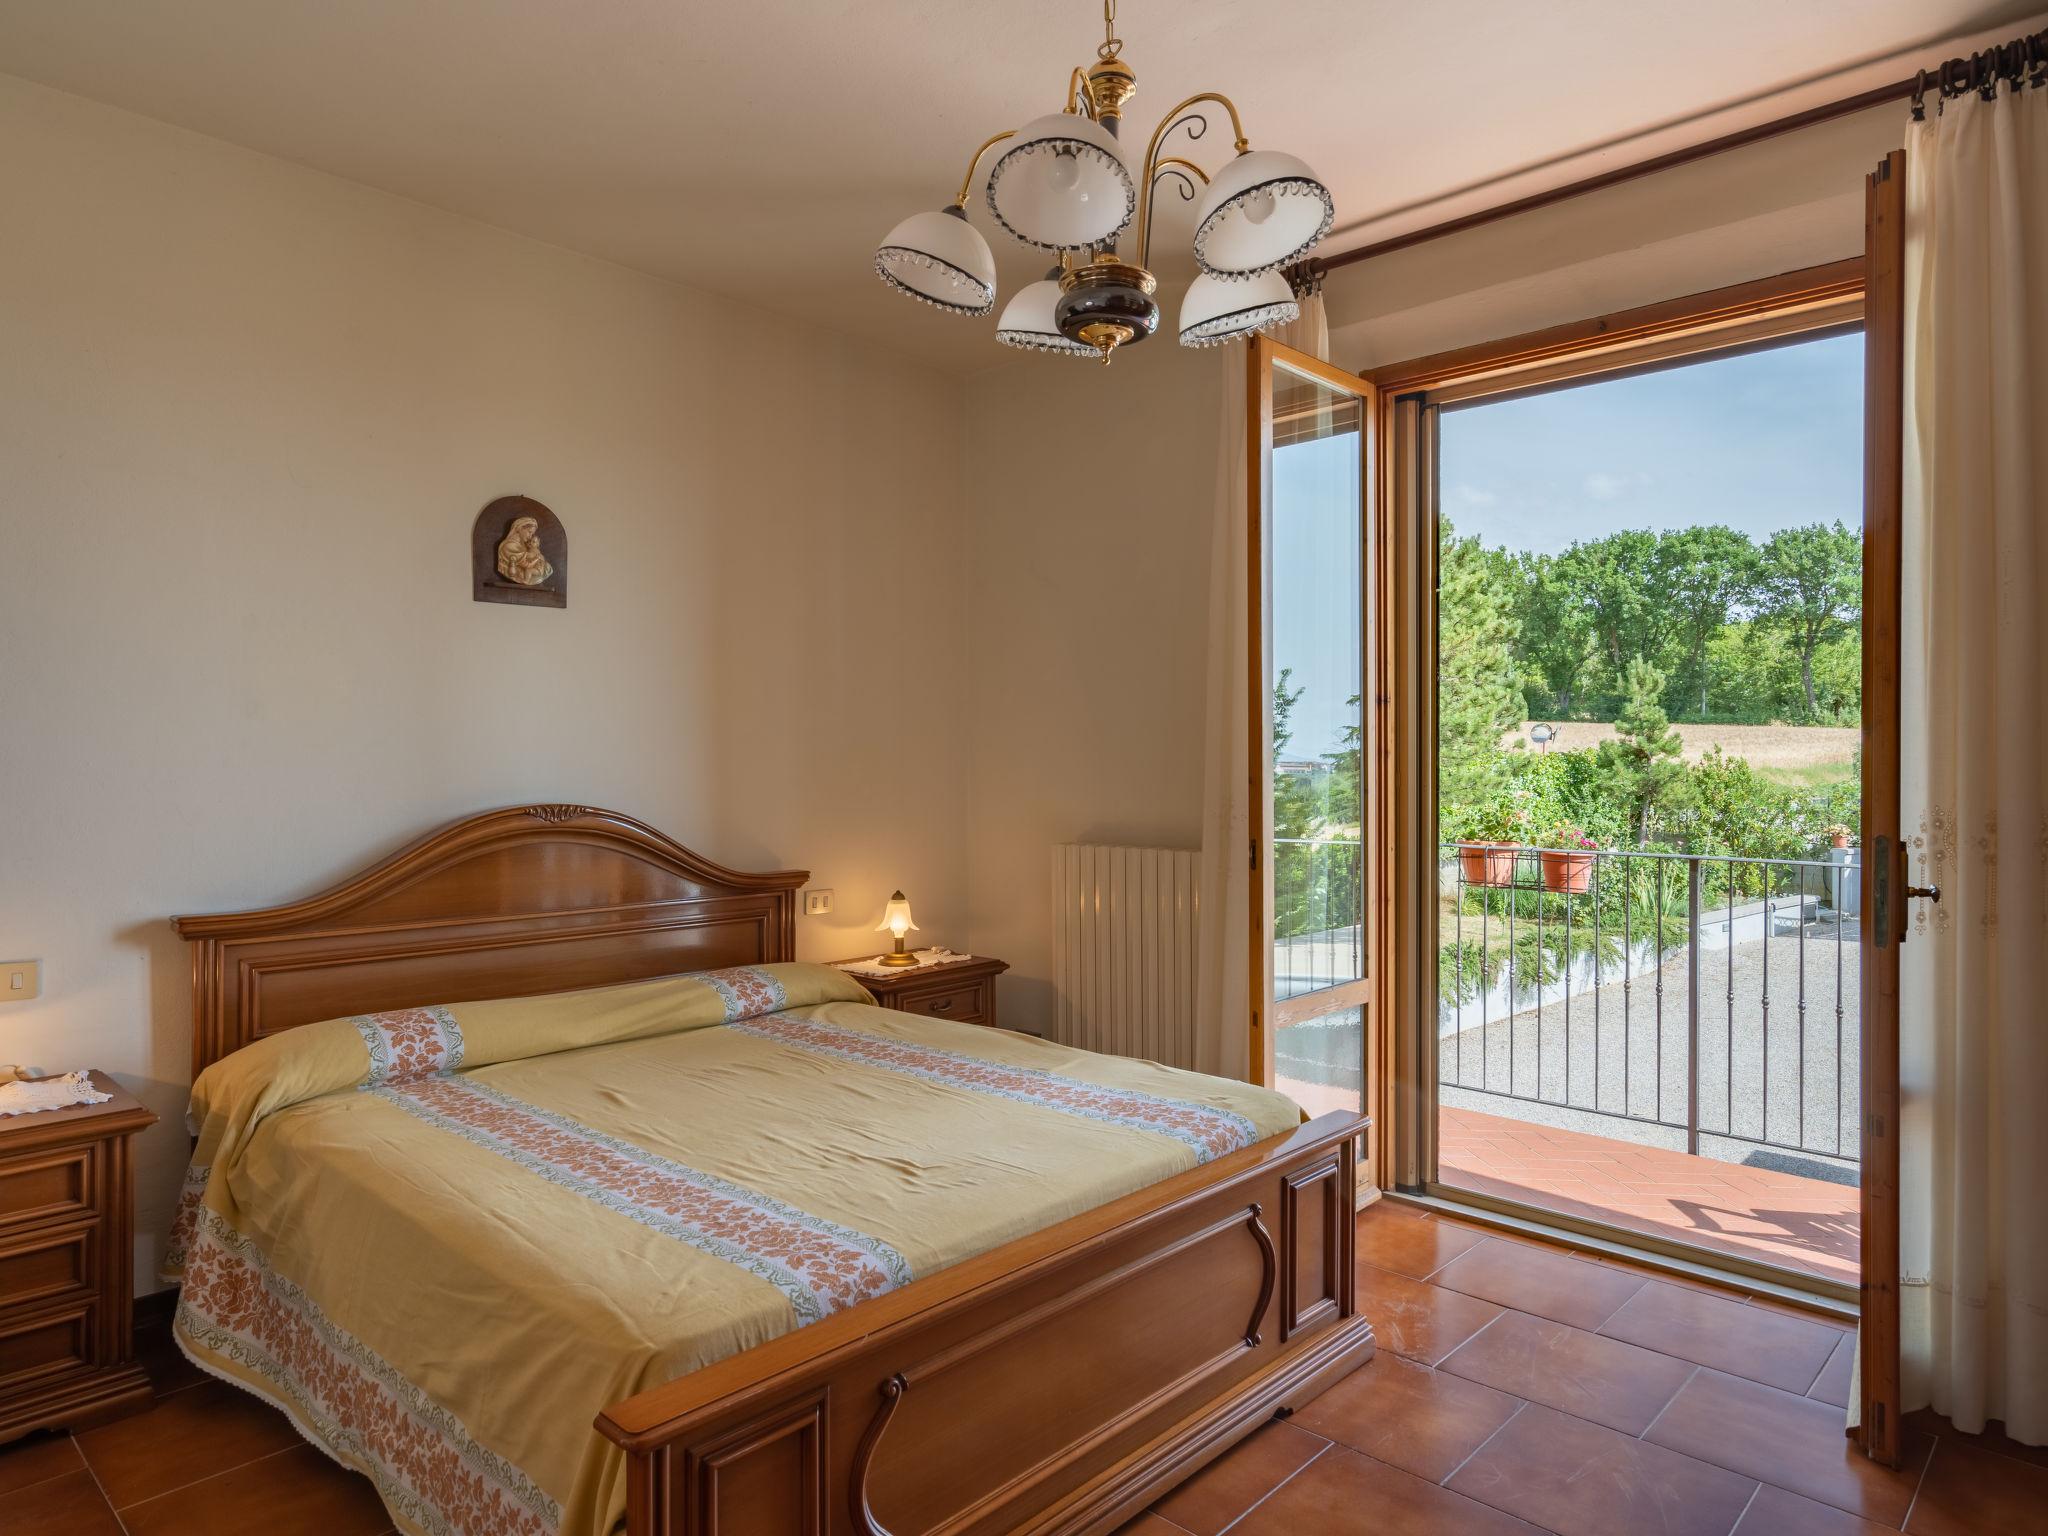 Photo 16 - 5 bedroom House in Foiano della Chiana with private pool and garden